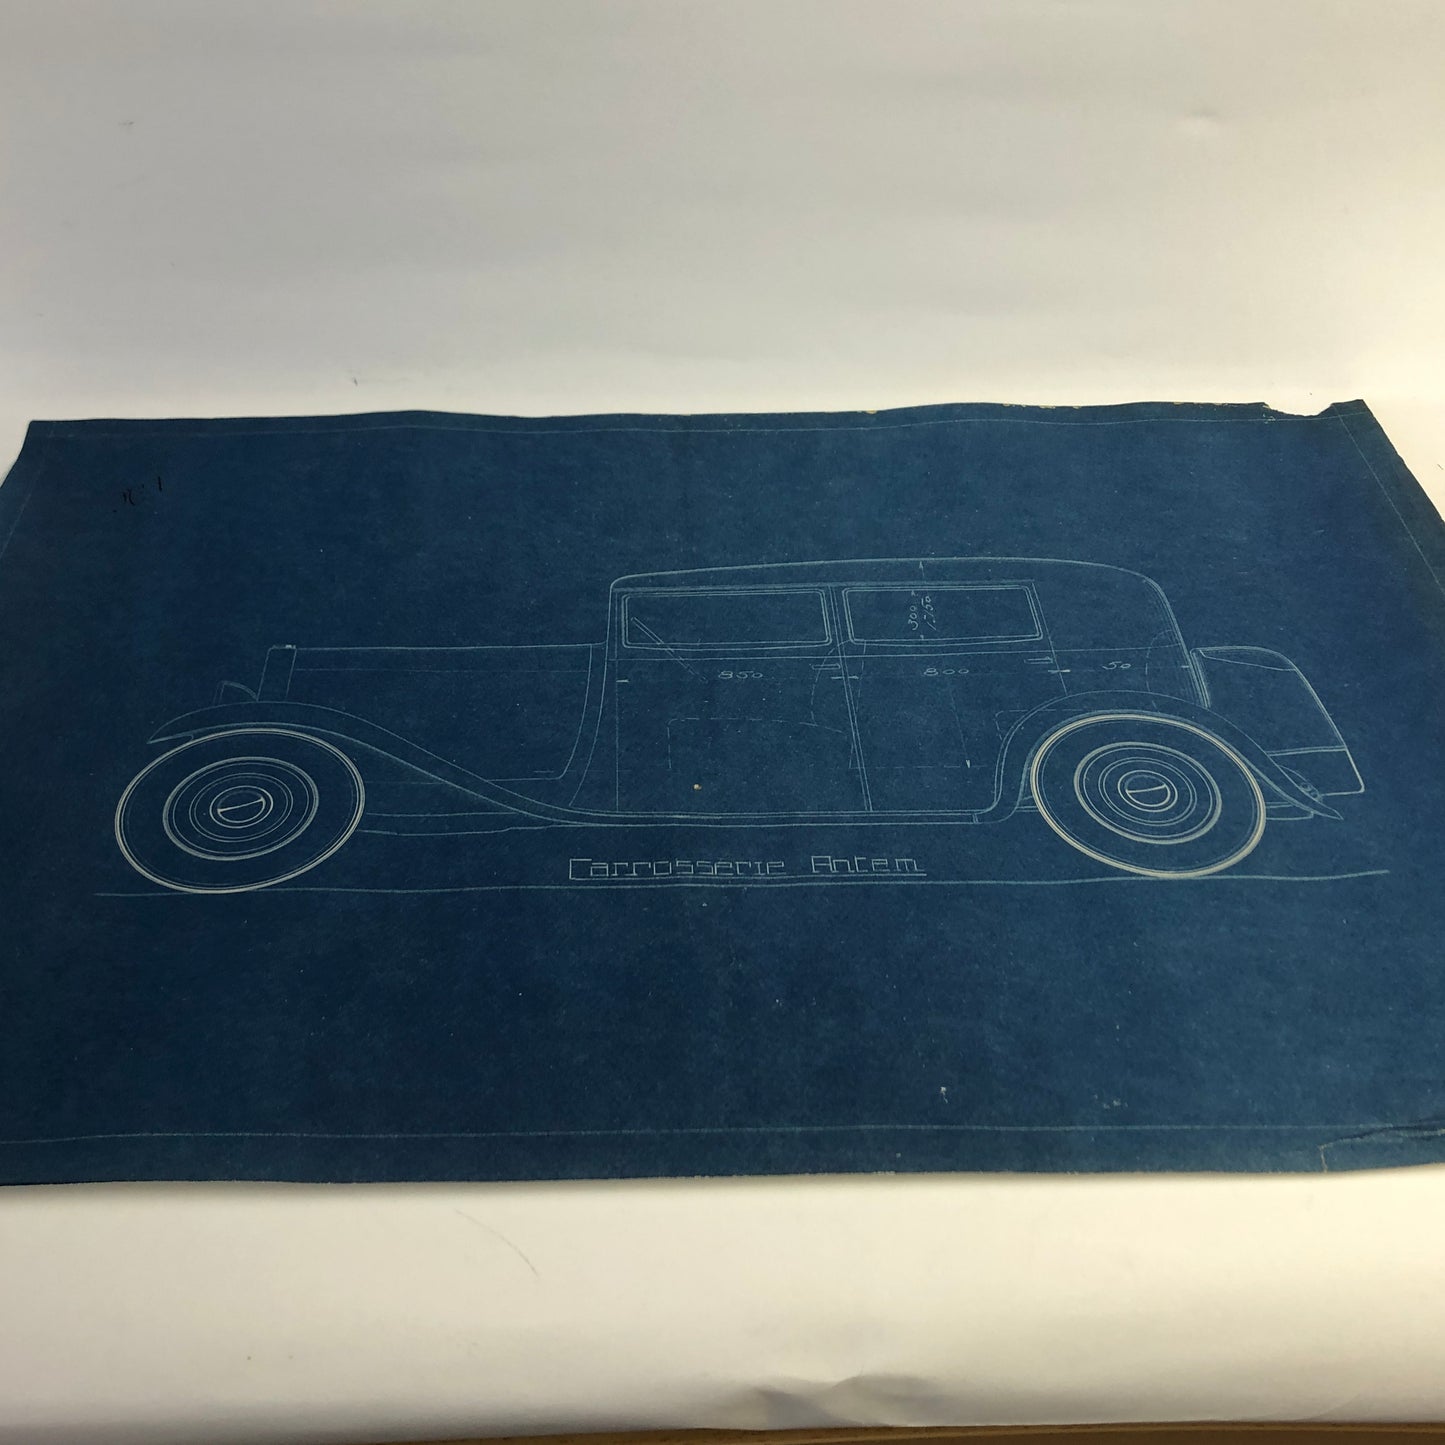 Carrosserie Antem, Blueprint n. 1 Year 1932 Licorne L760 with Carrosserie Antem stamp